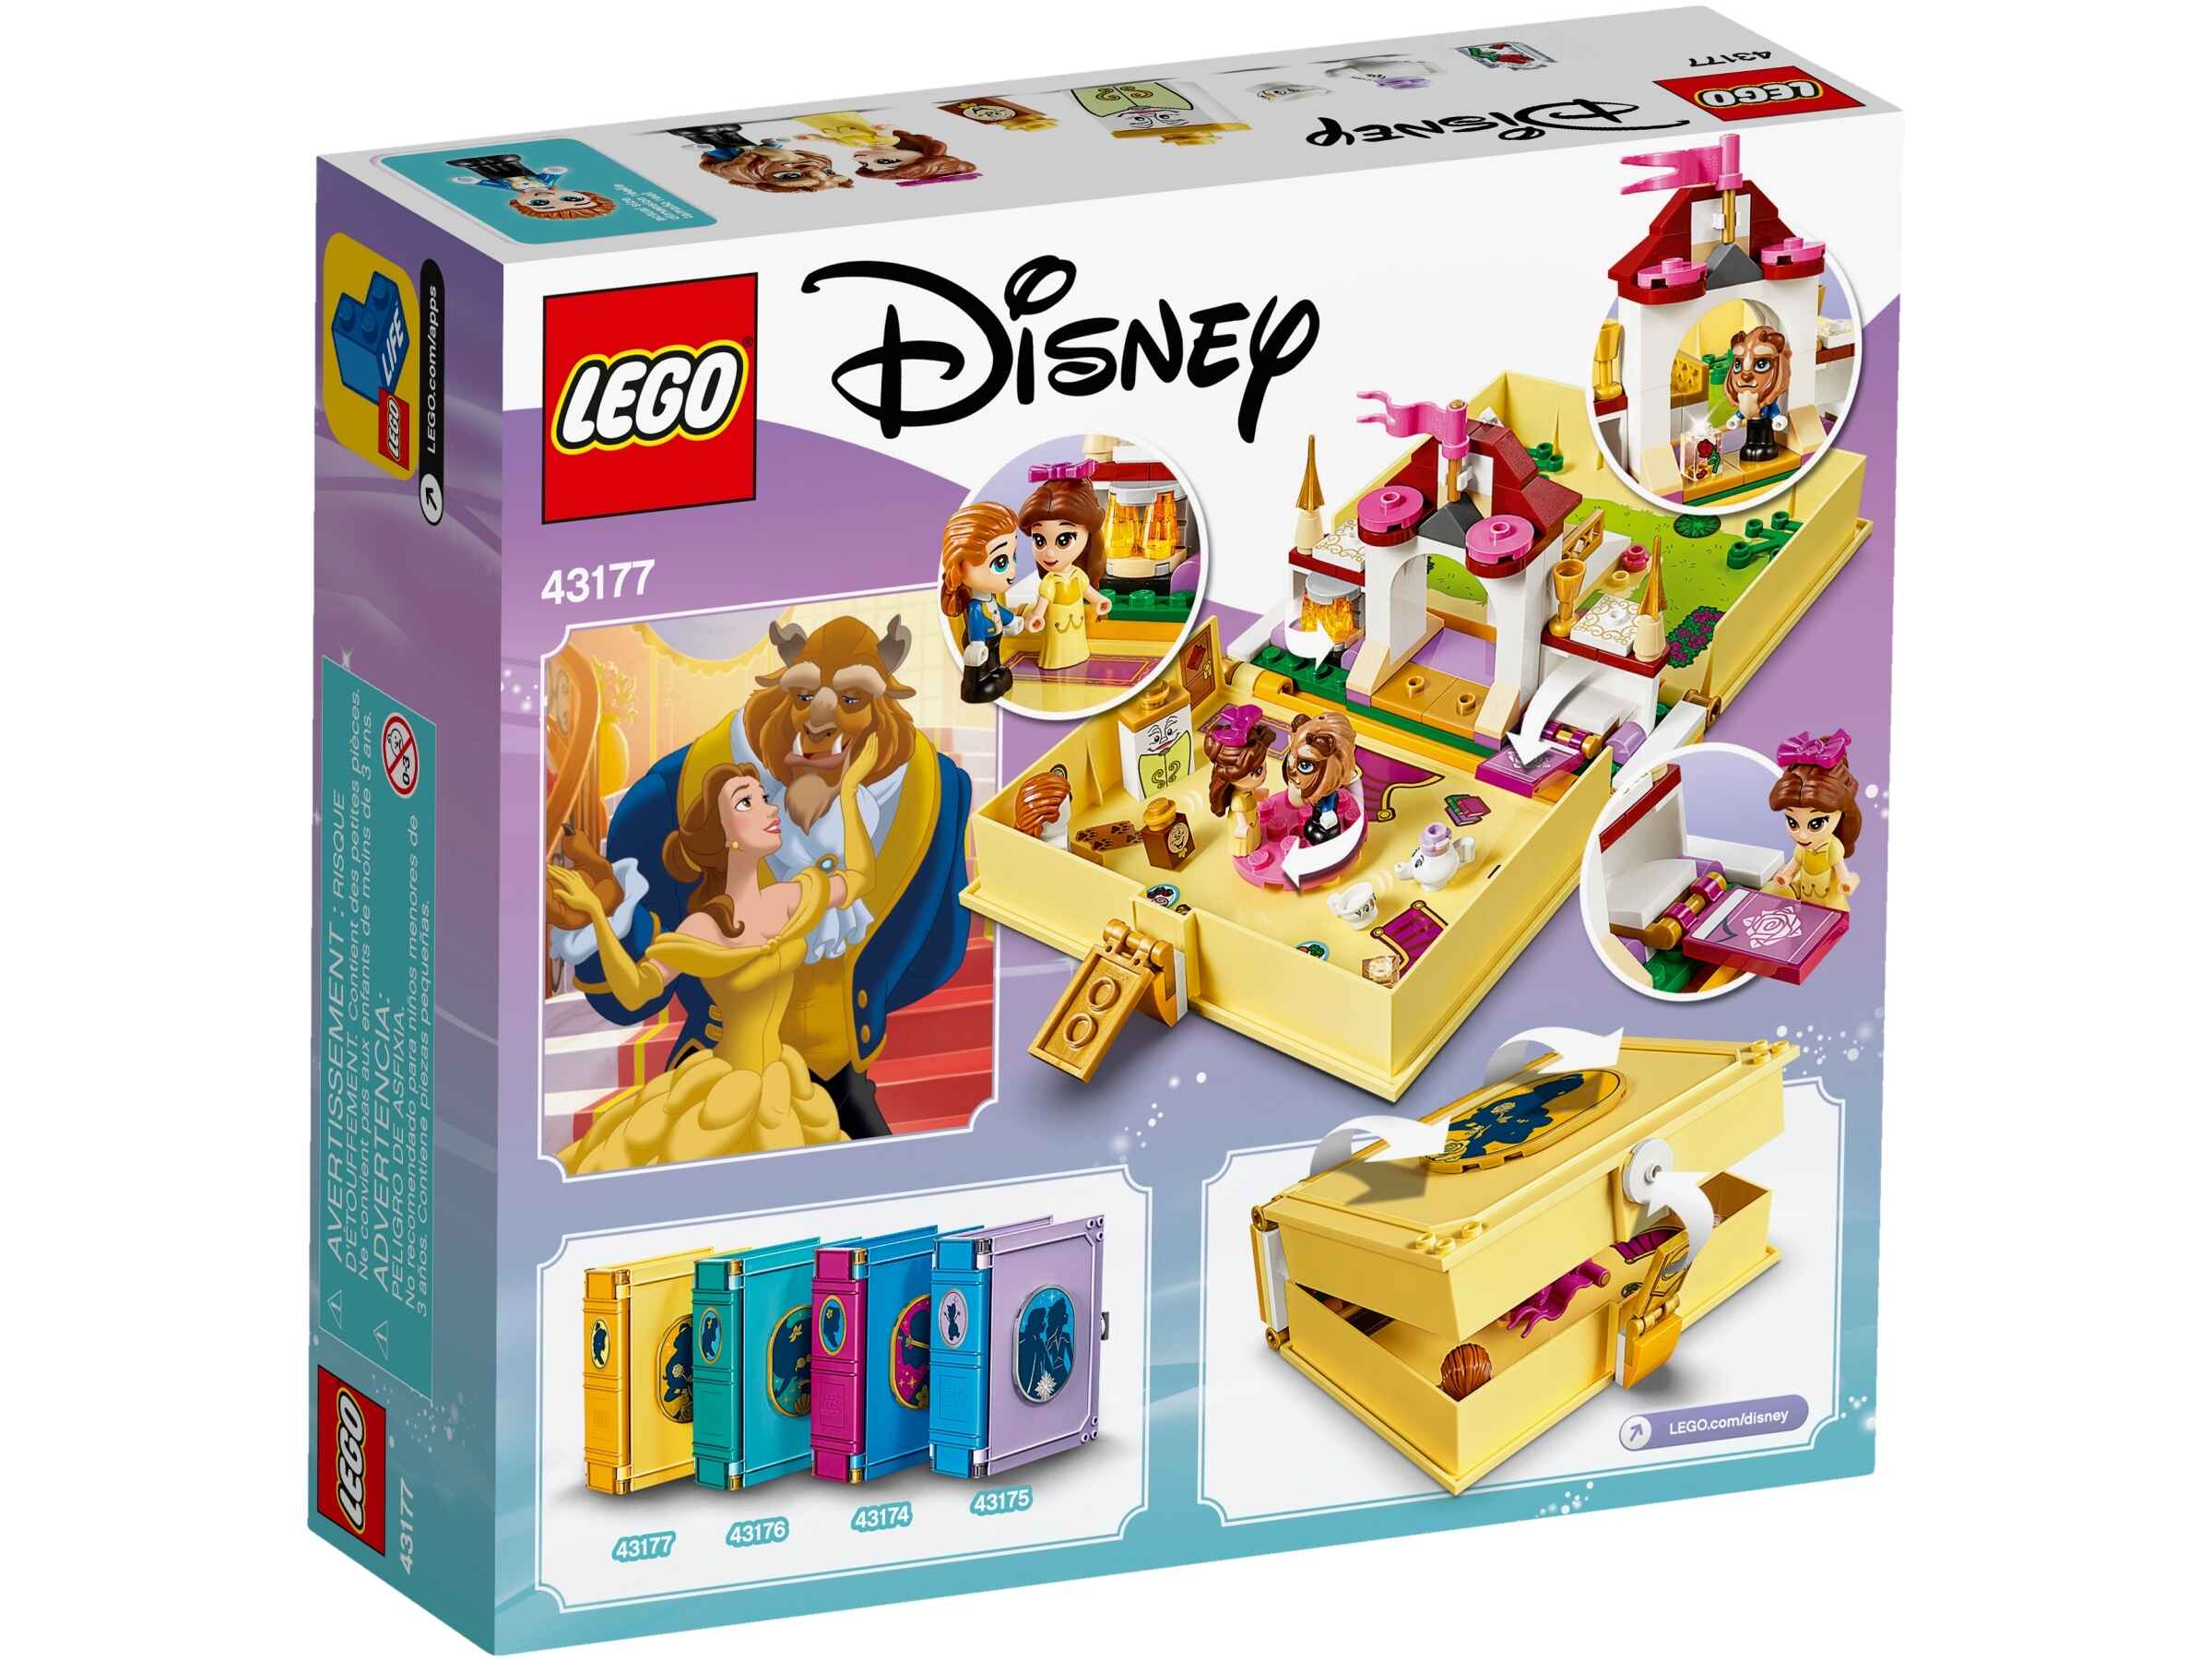 LEGO 43177 Disney Princess tragbares Märchenbuch Spielset: Belles Abenteuer-Set, Lobigo.de: Spielzeug